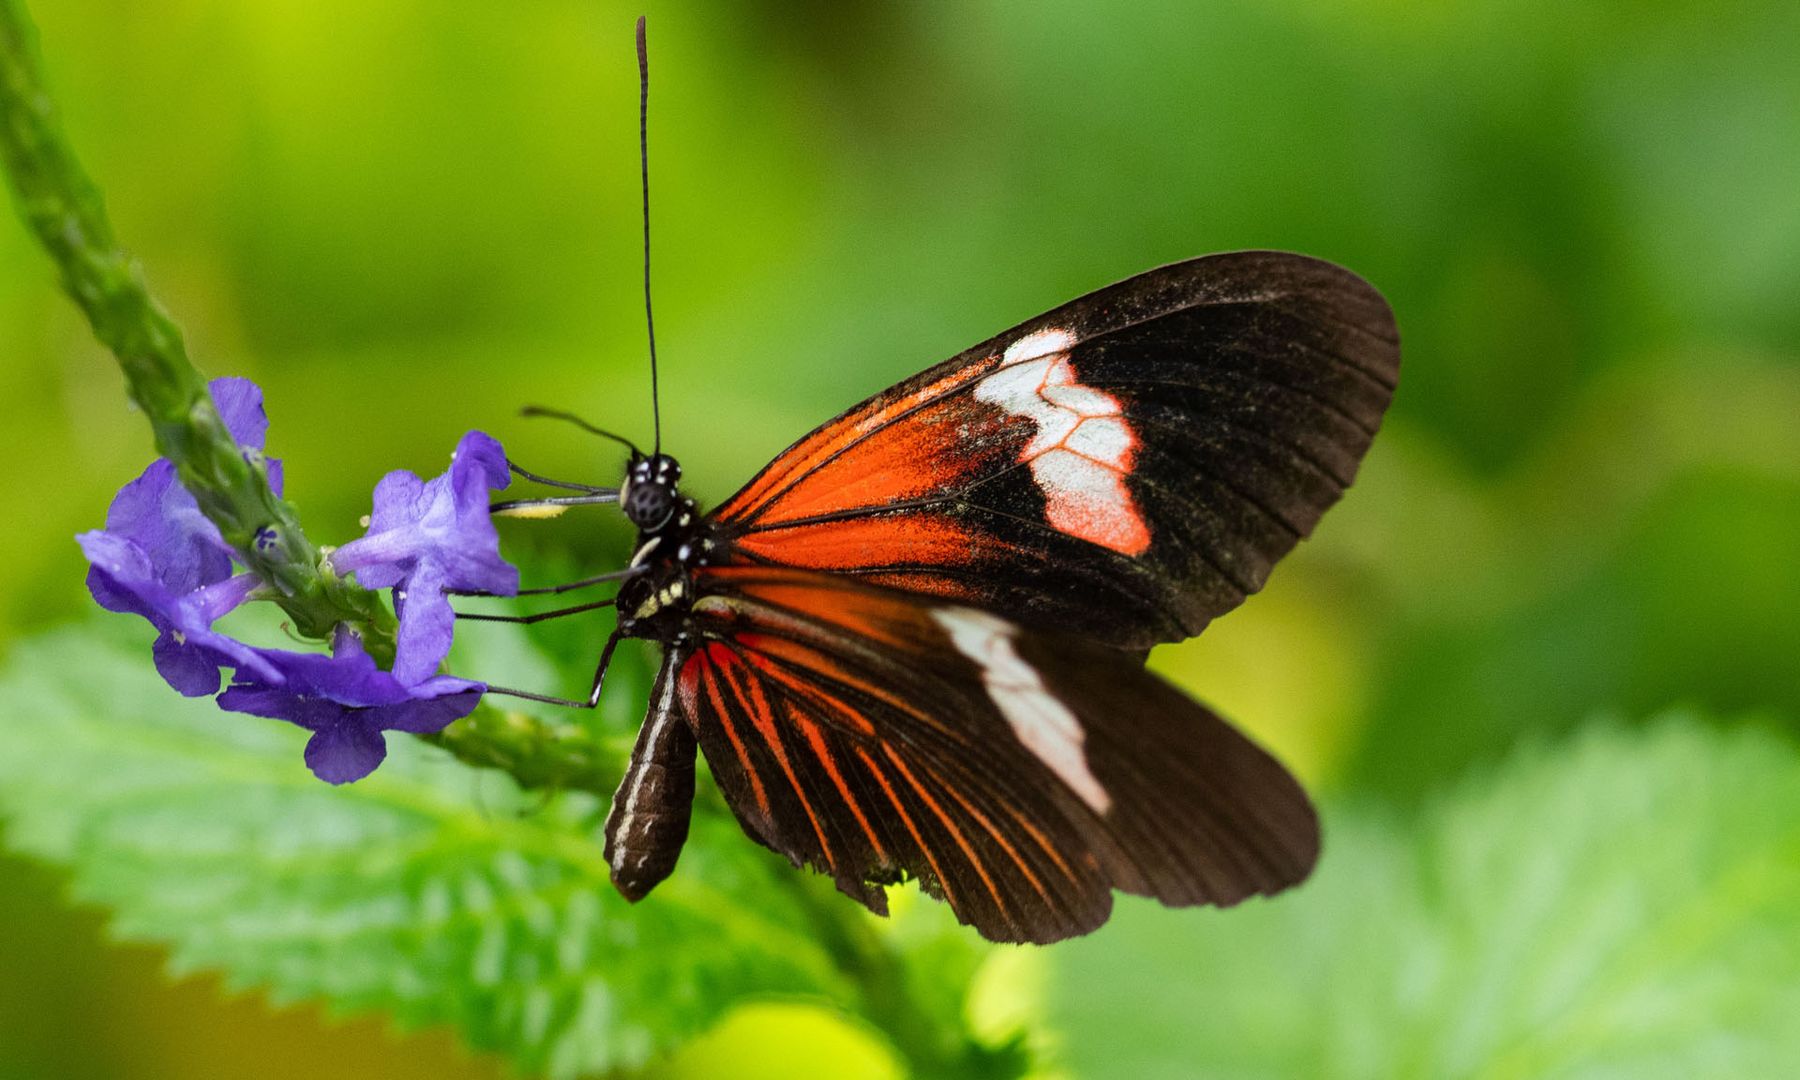 Heliconius-Schmetterling